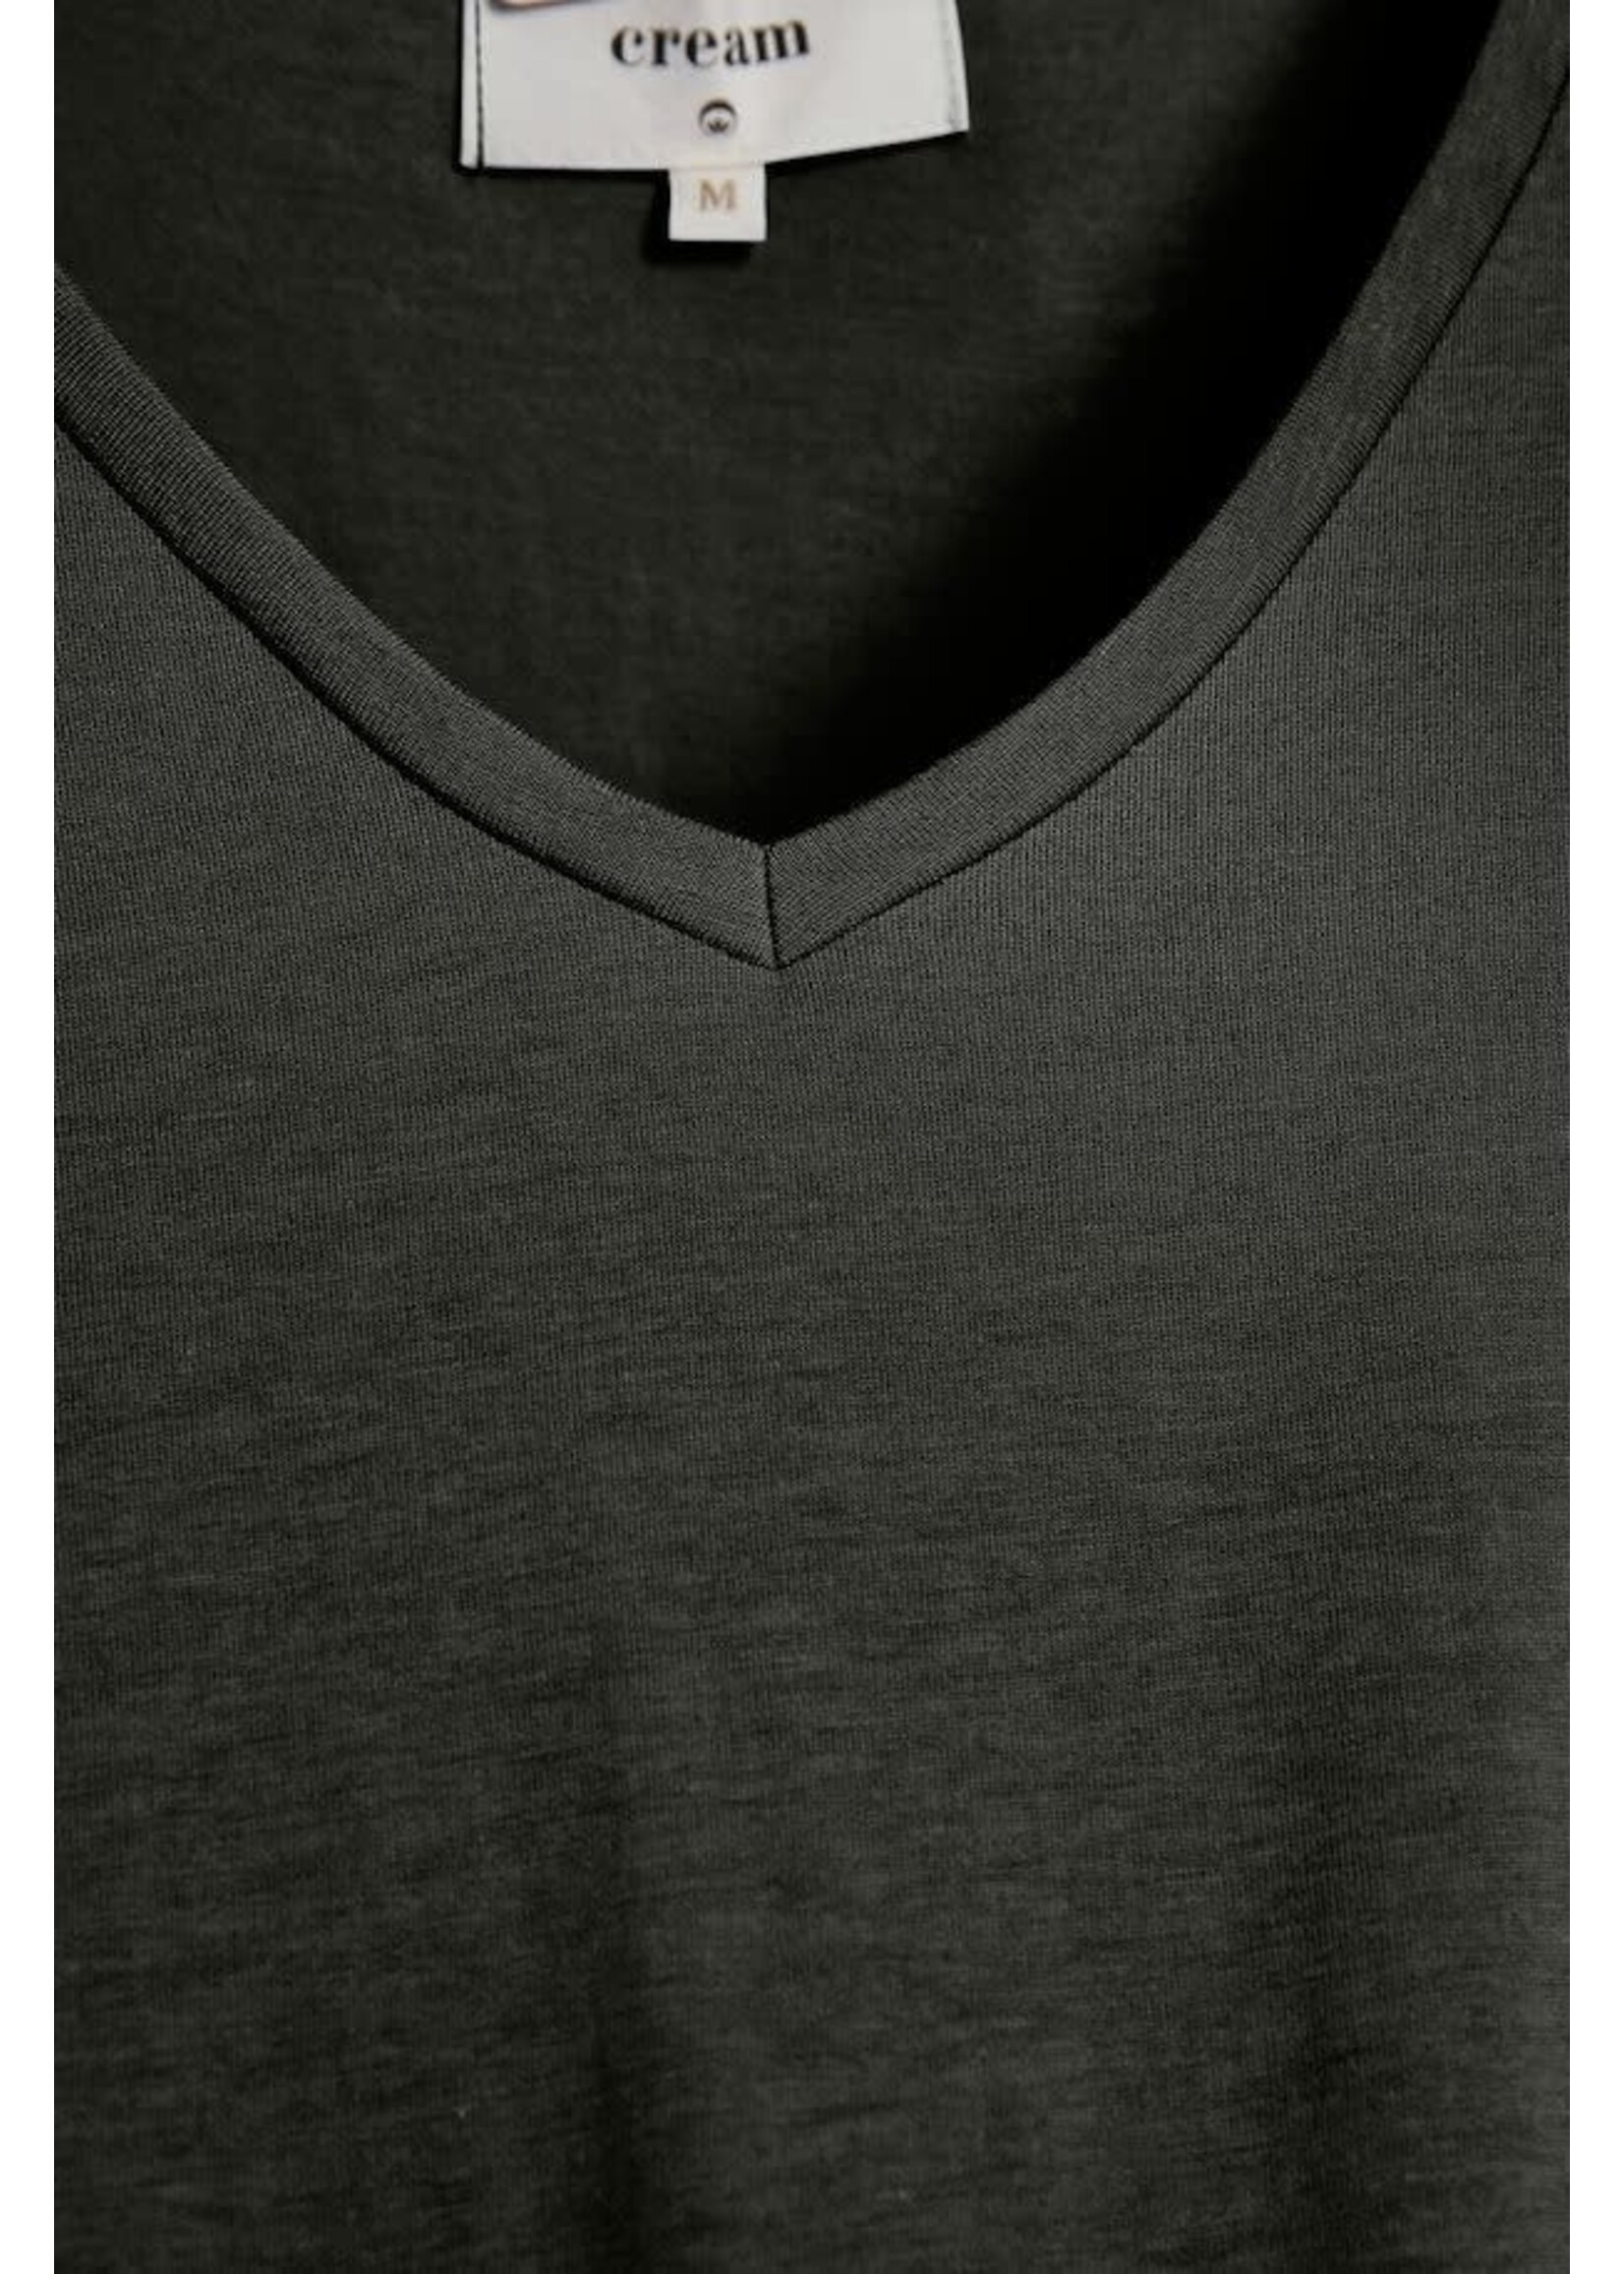 CREAM Naia T-shirt Color:Pitch Black